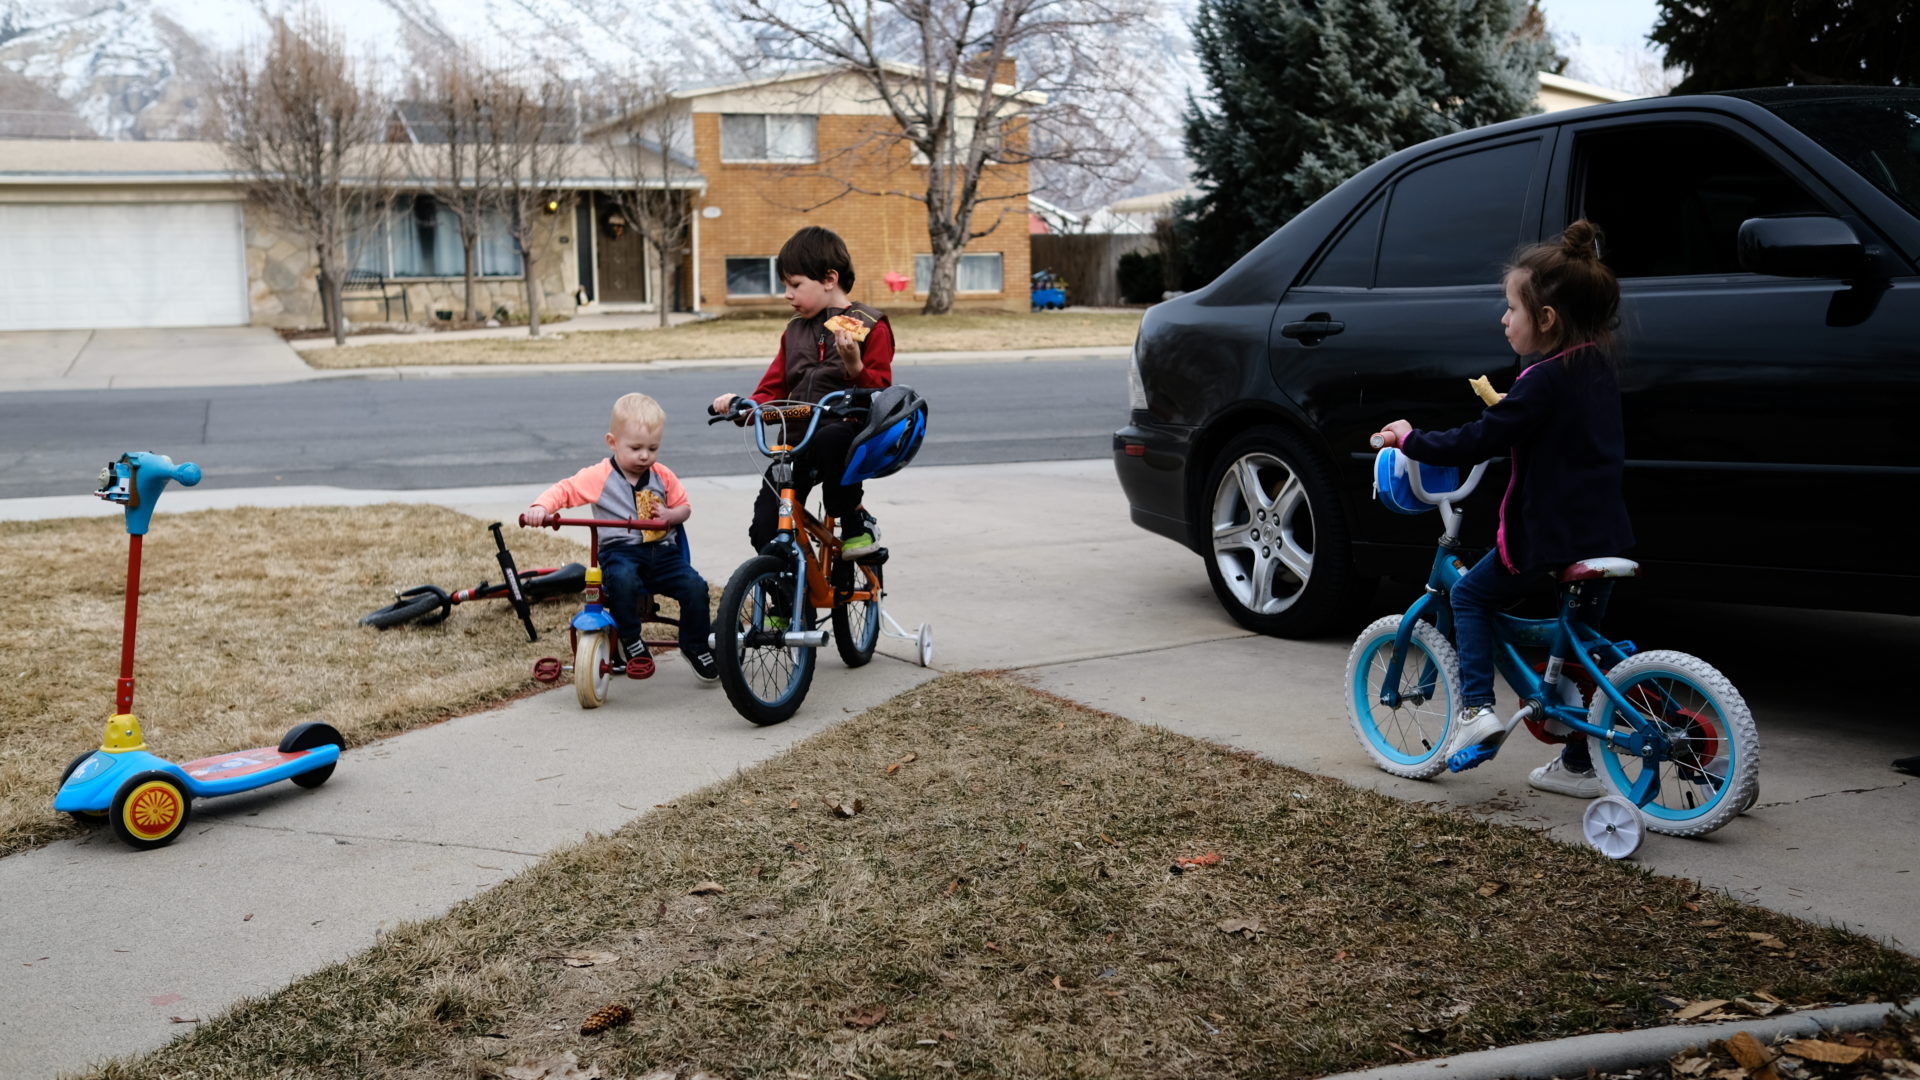 Kids sit on bikes on a warm winter day.